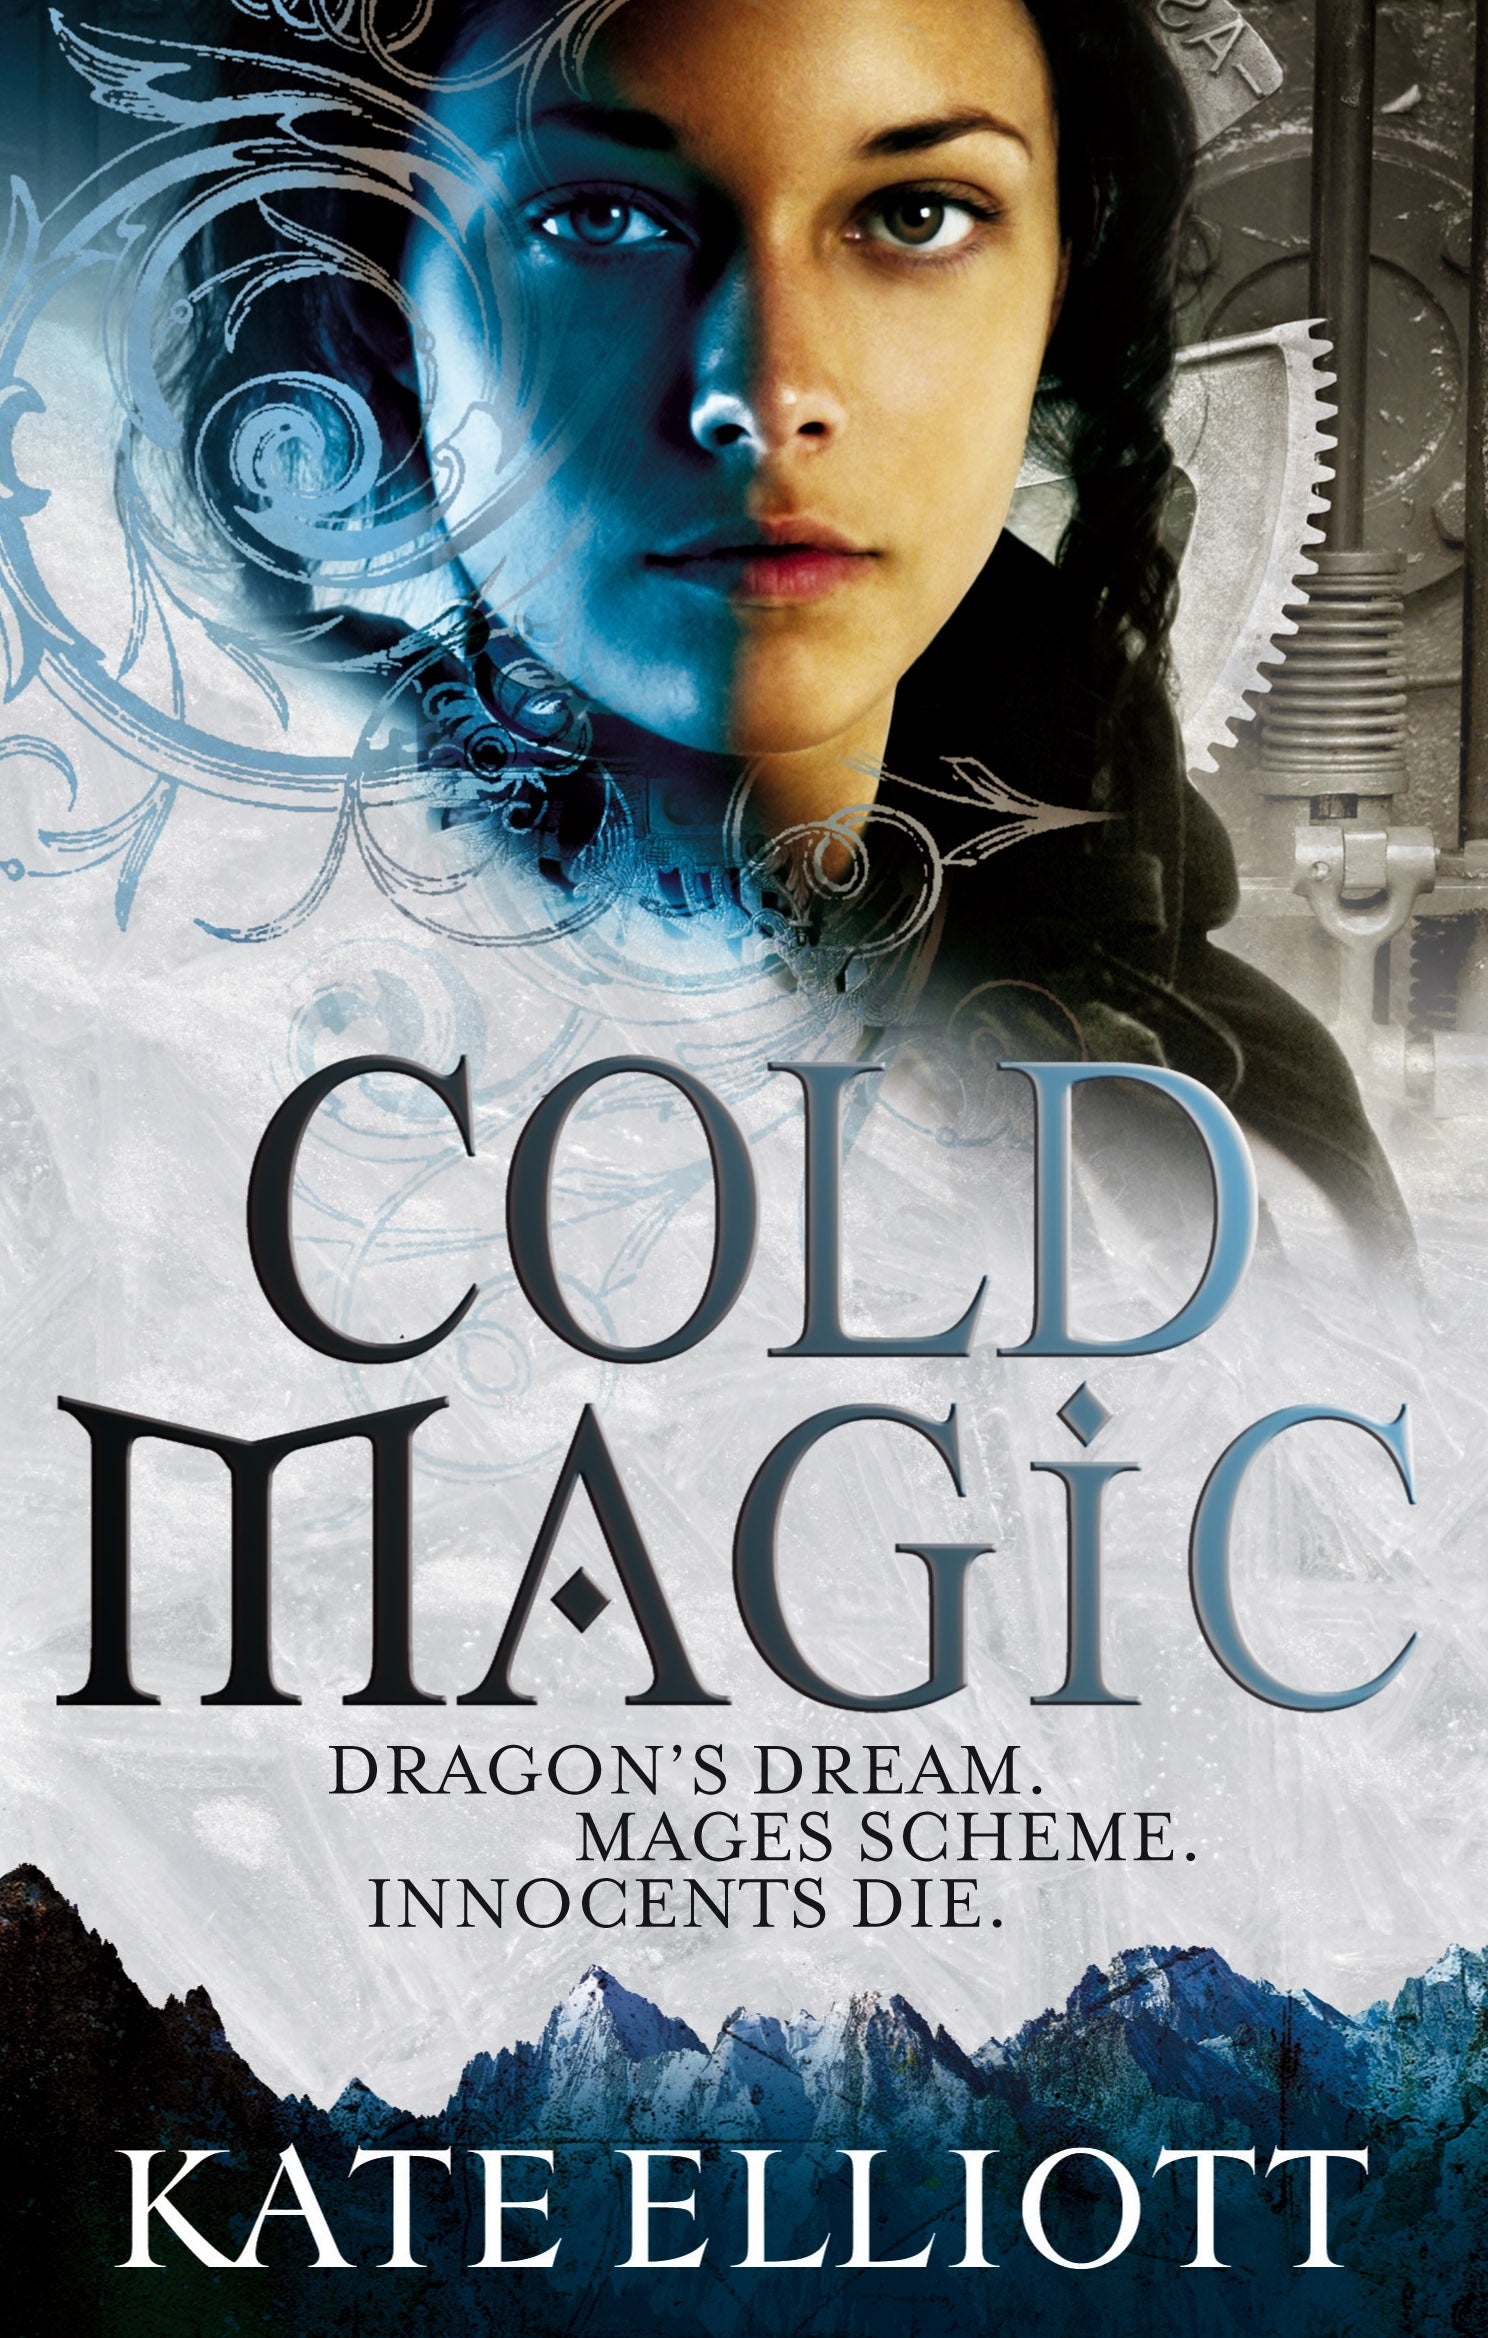 Cold Magic by Kate Elliott